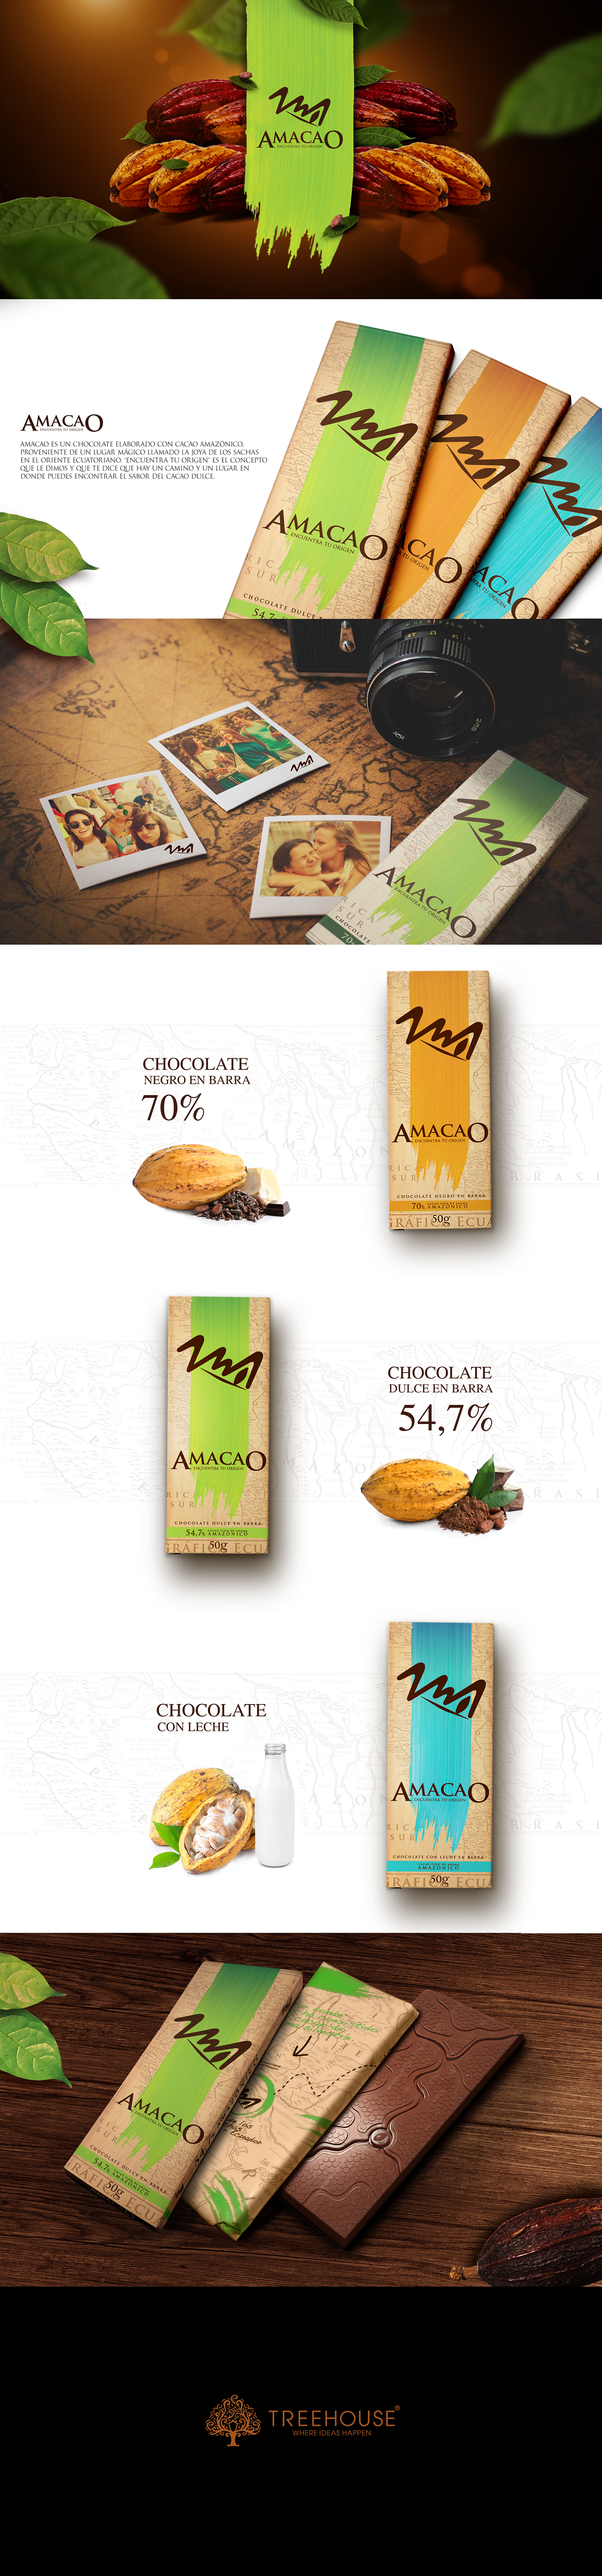 chocolate Packaging design Amazonas Ecuador quito cacao product Candy amacao